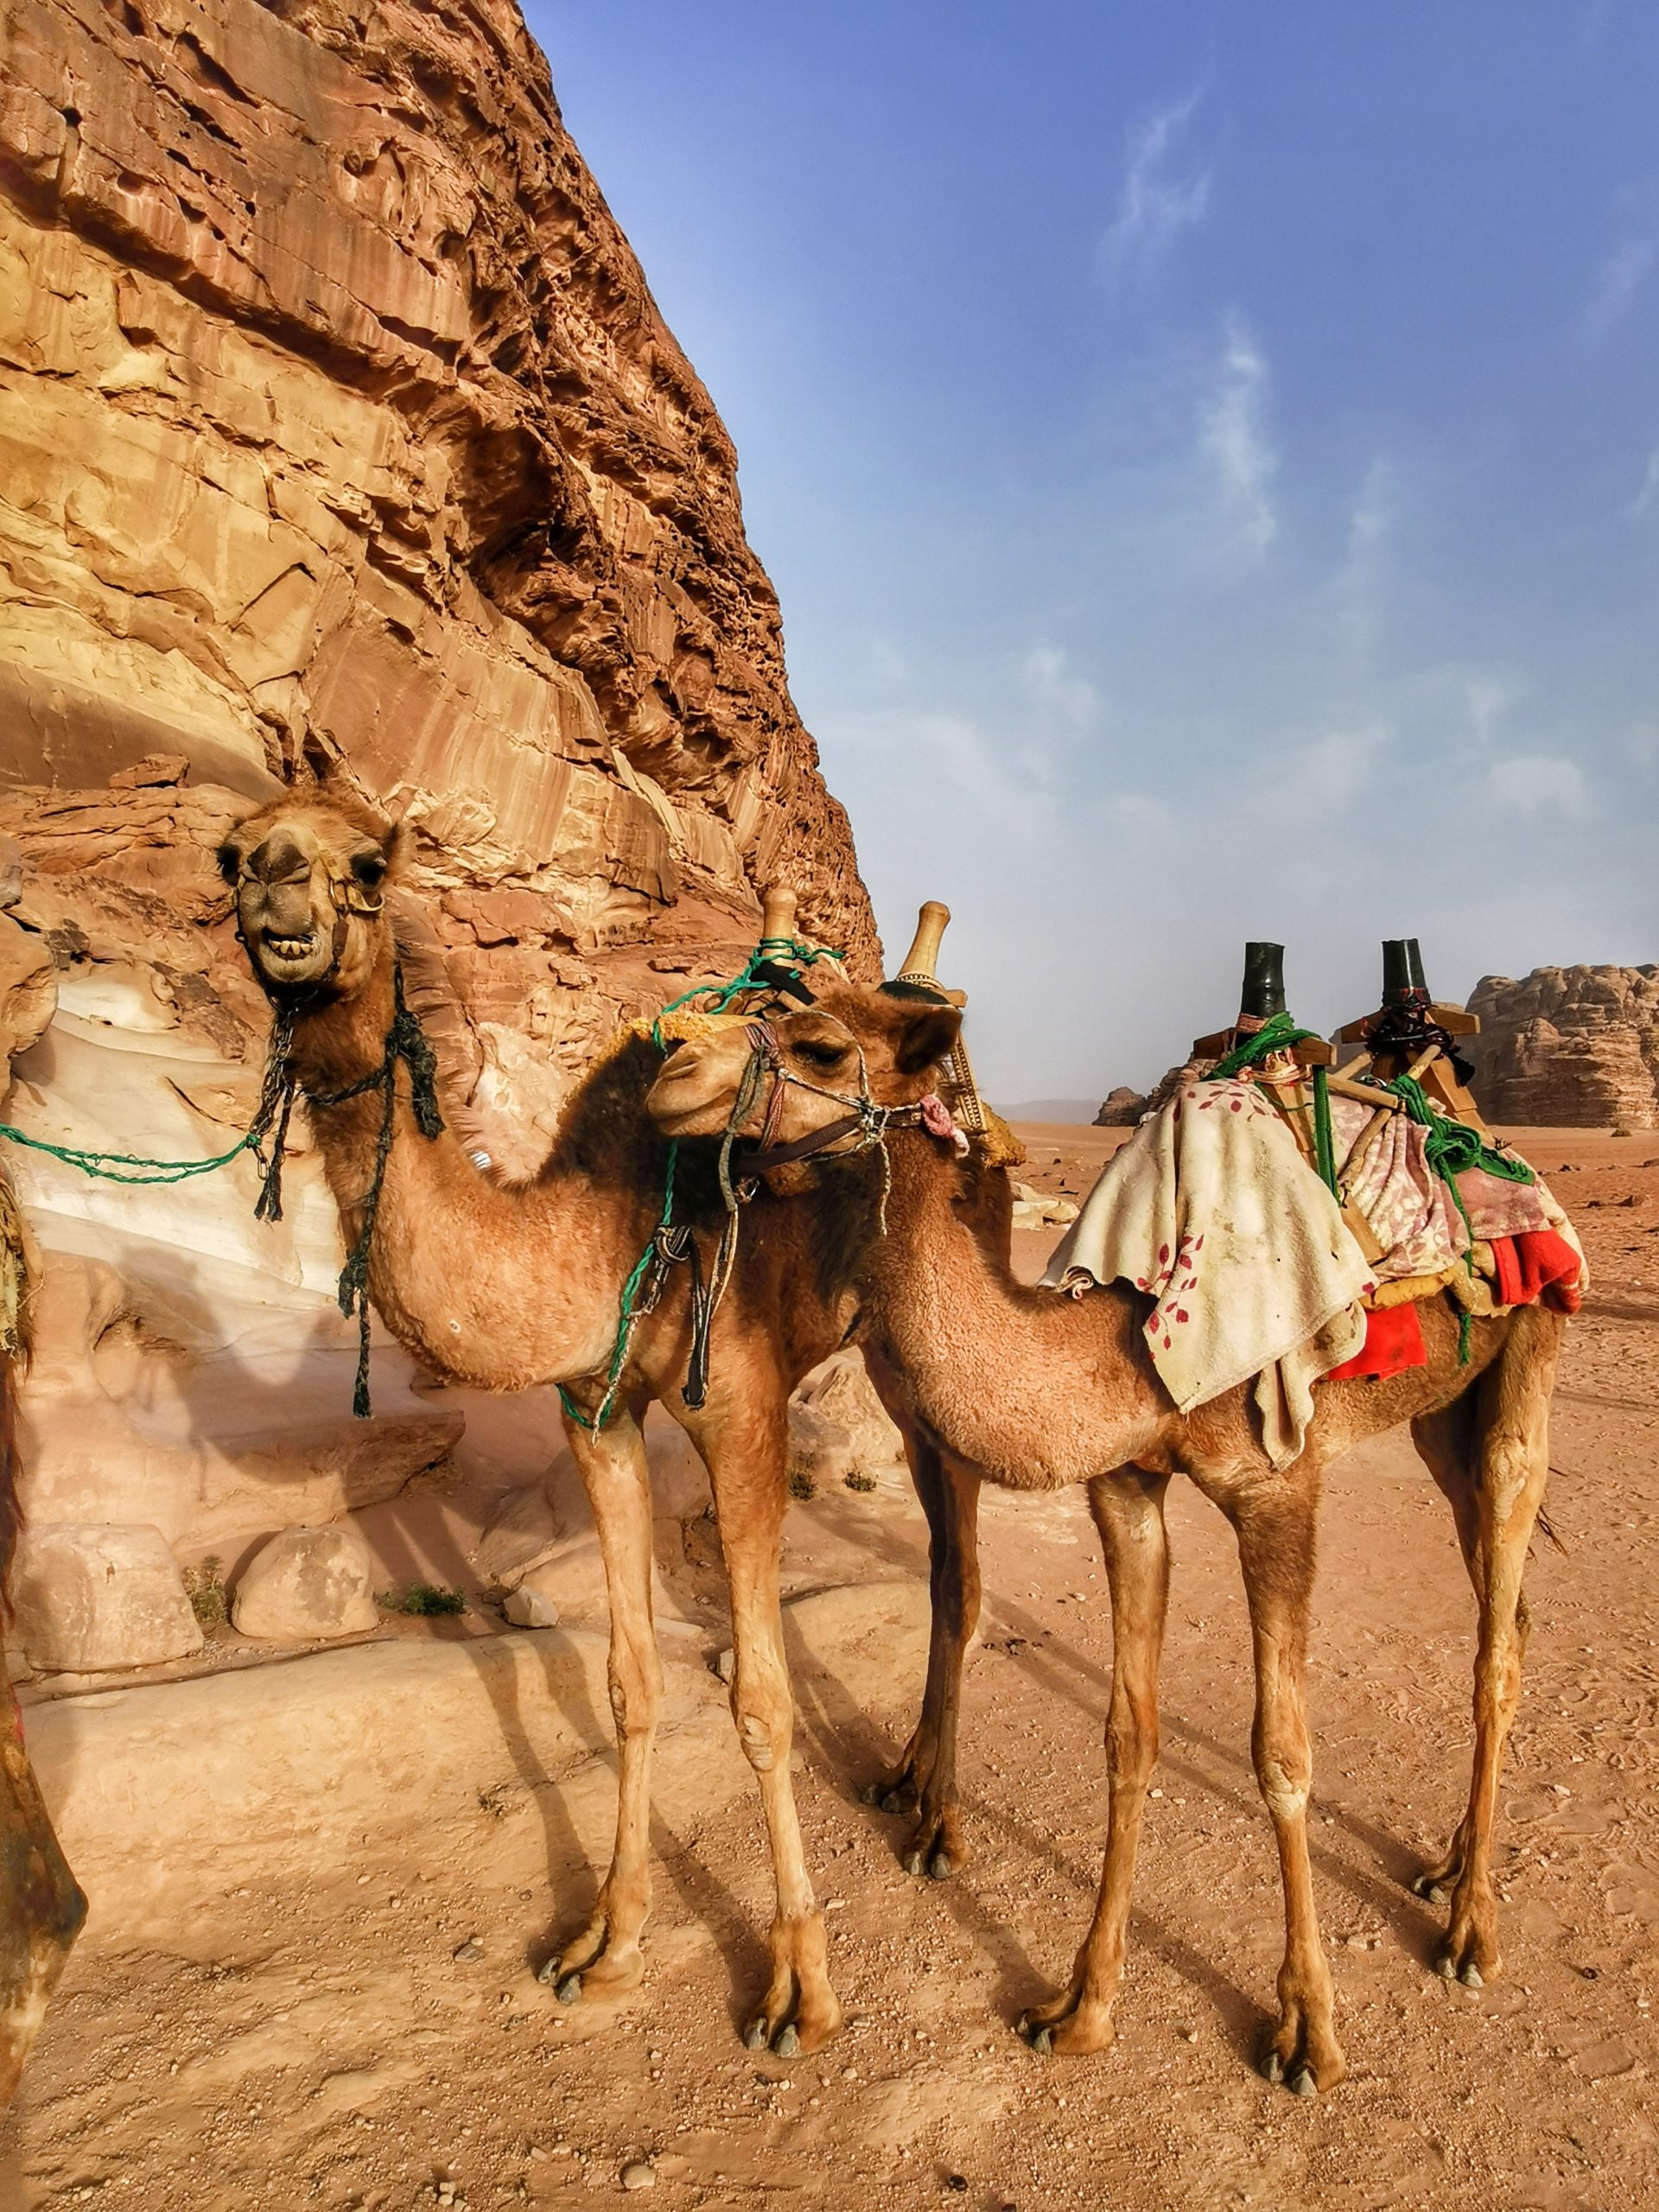 jordan wadi rum desert traveladdict